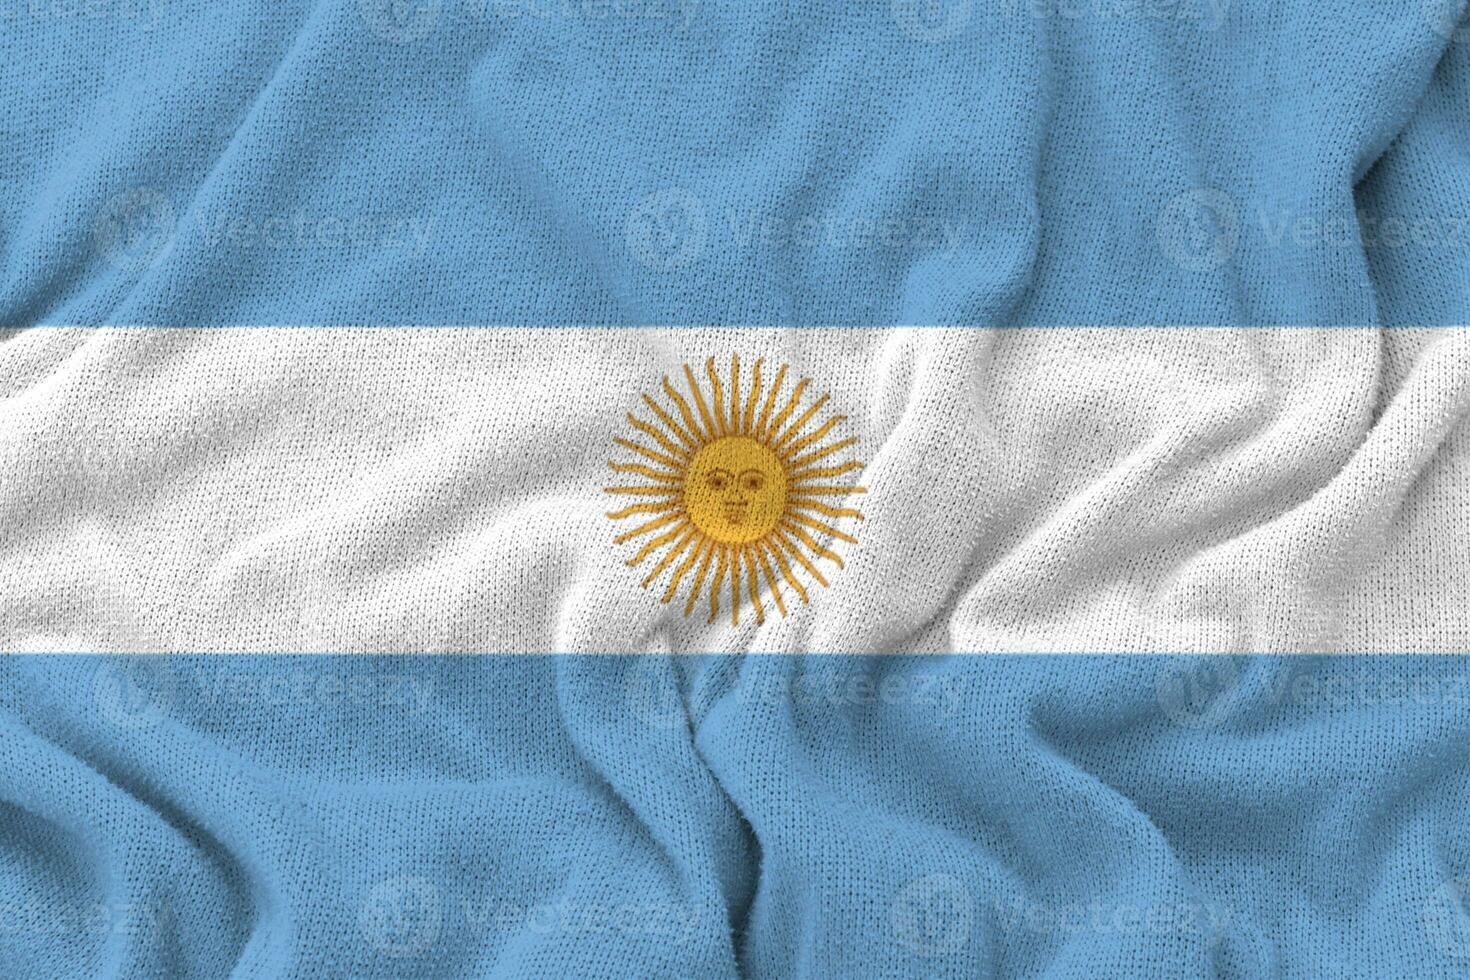 tecido tecido textura bandeira nacional da argentina. foto